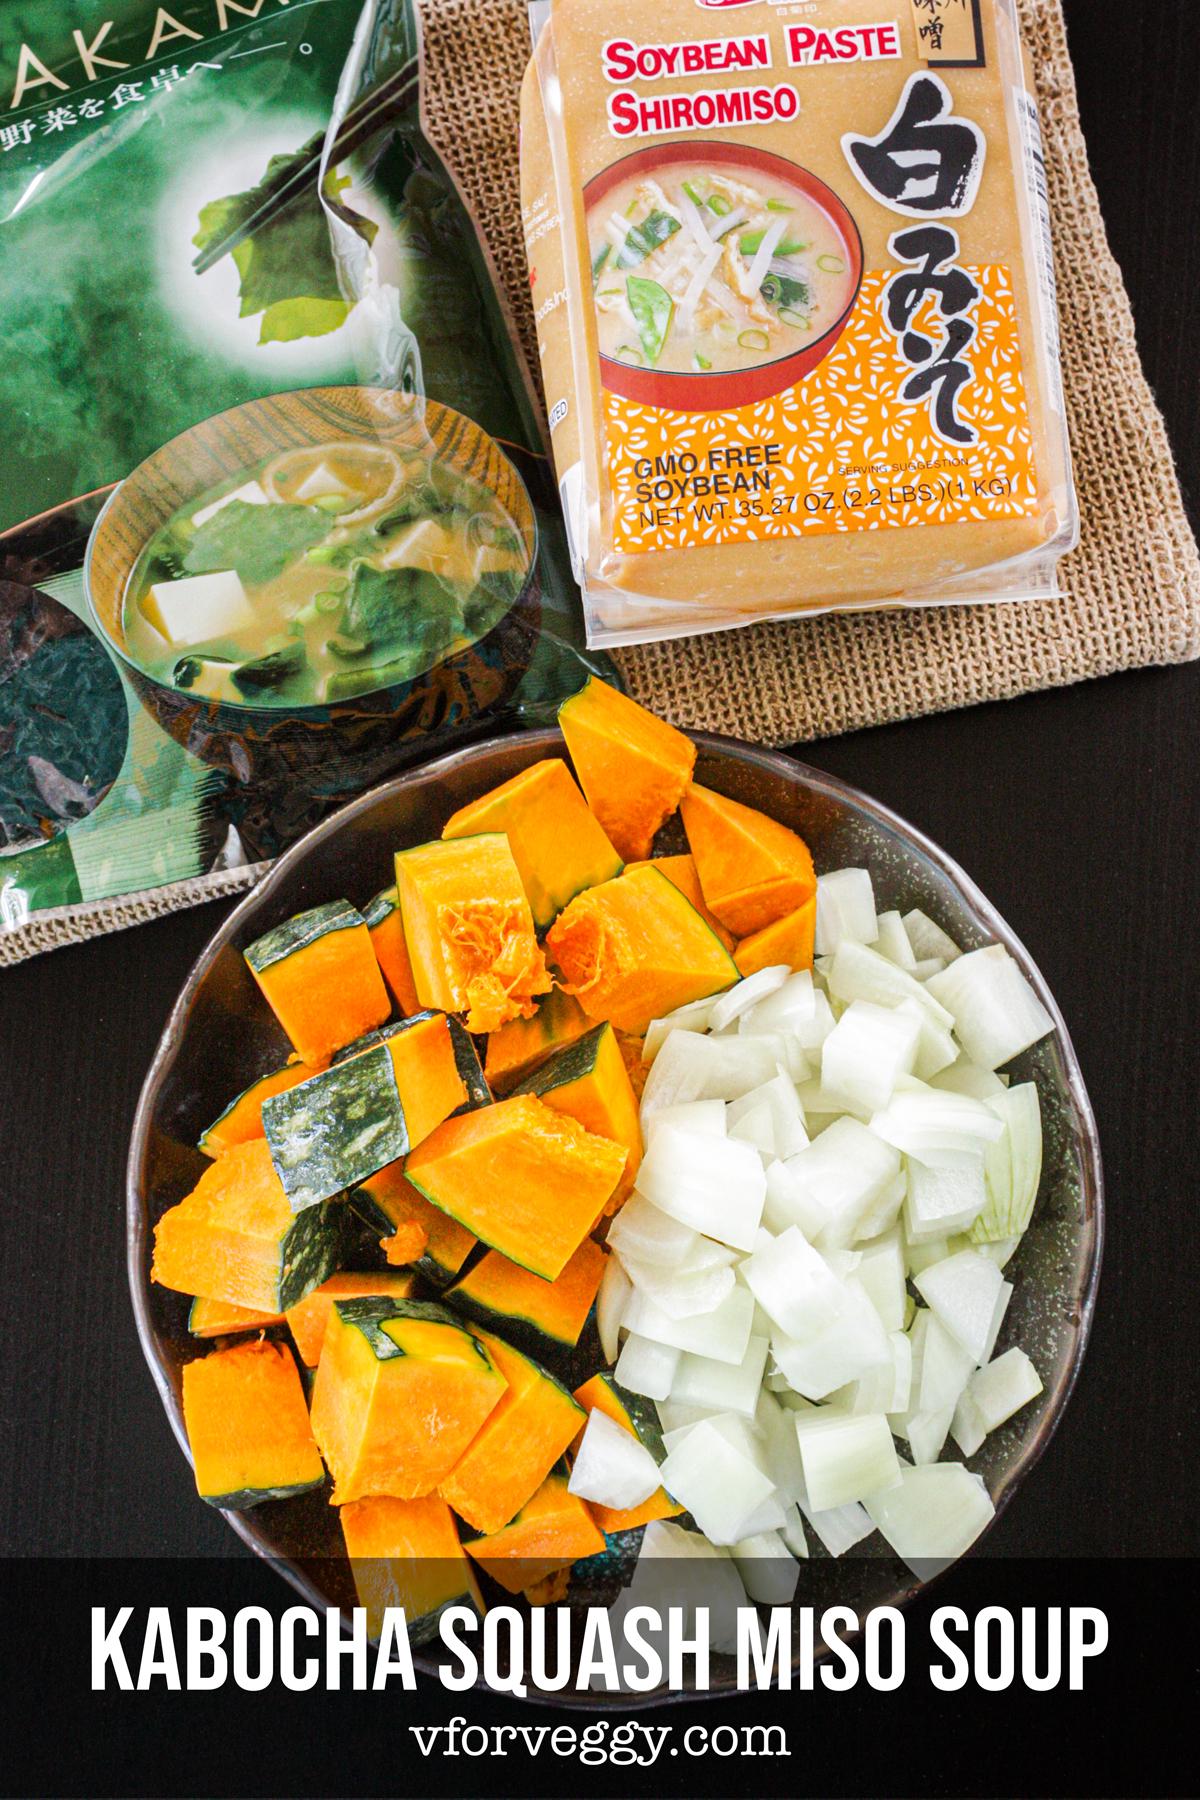 Ingredients to Prepare Kabocha Squash Miso Soup